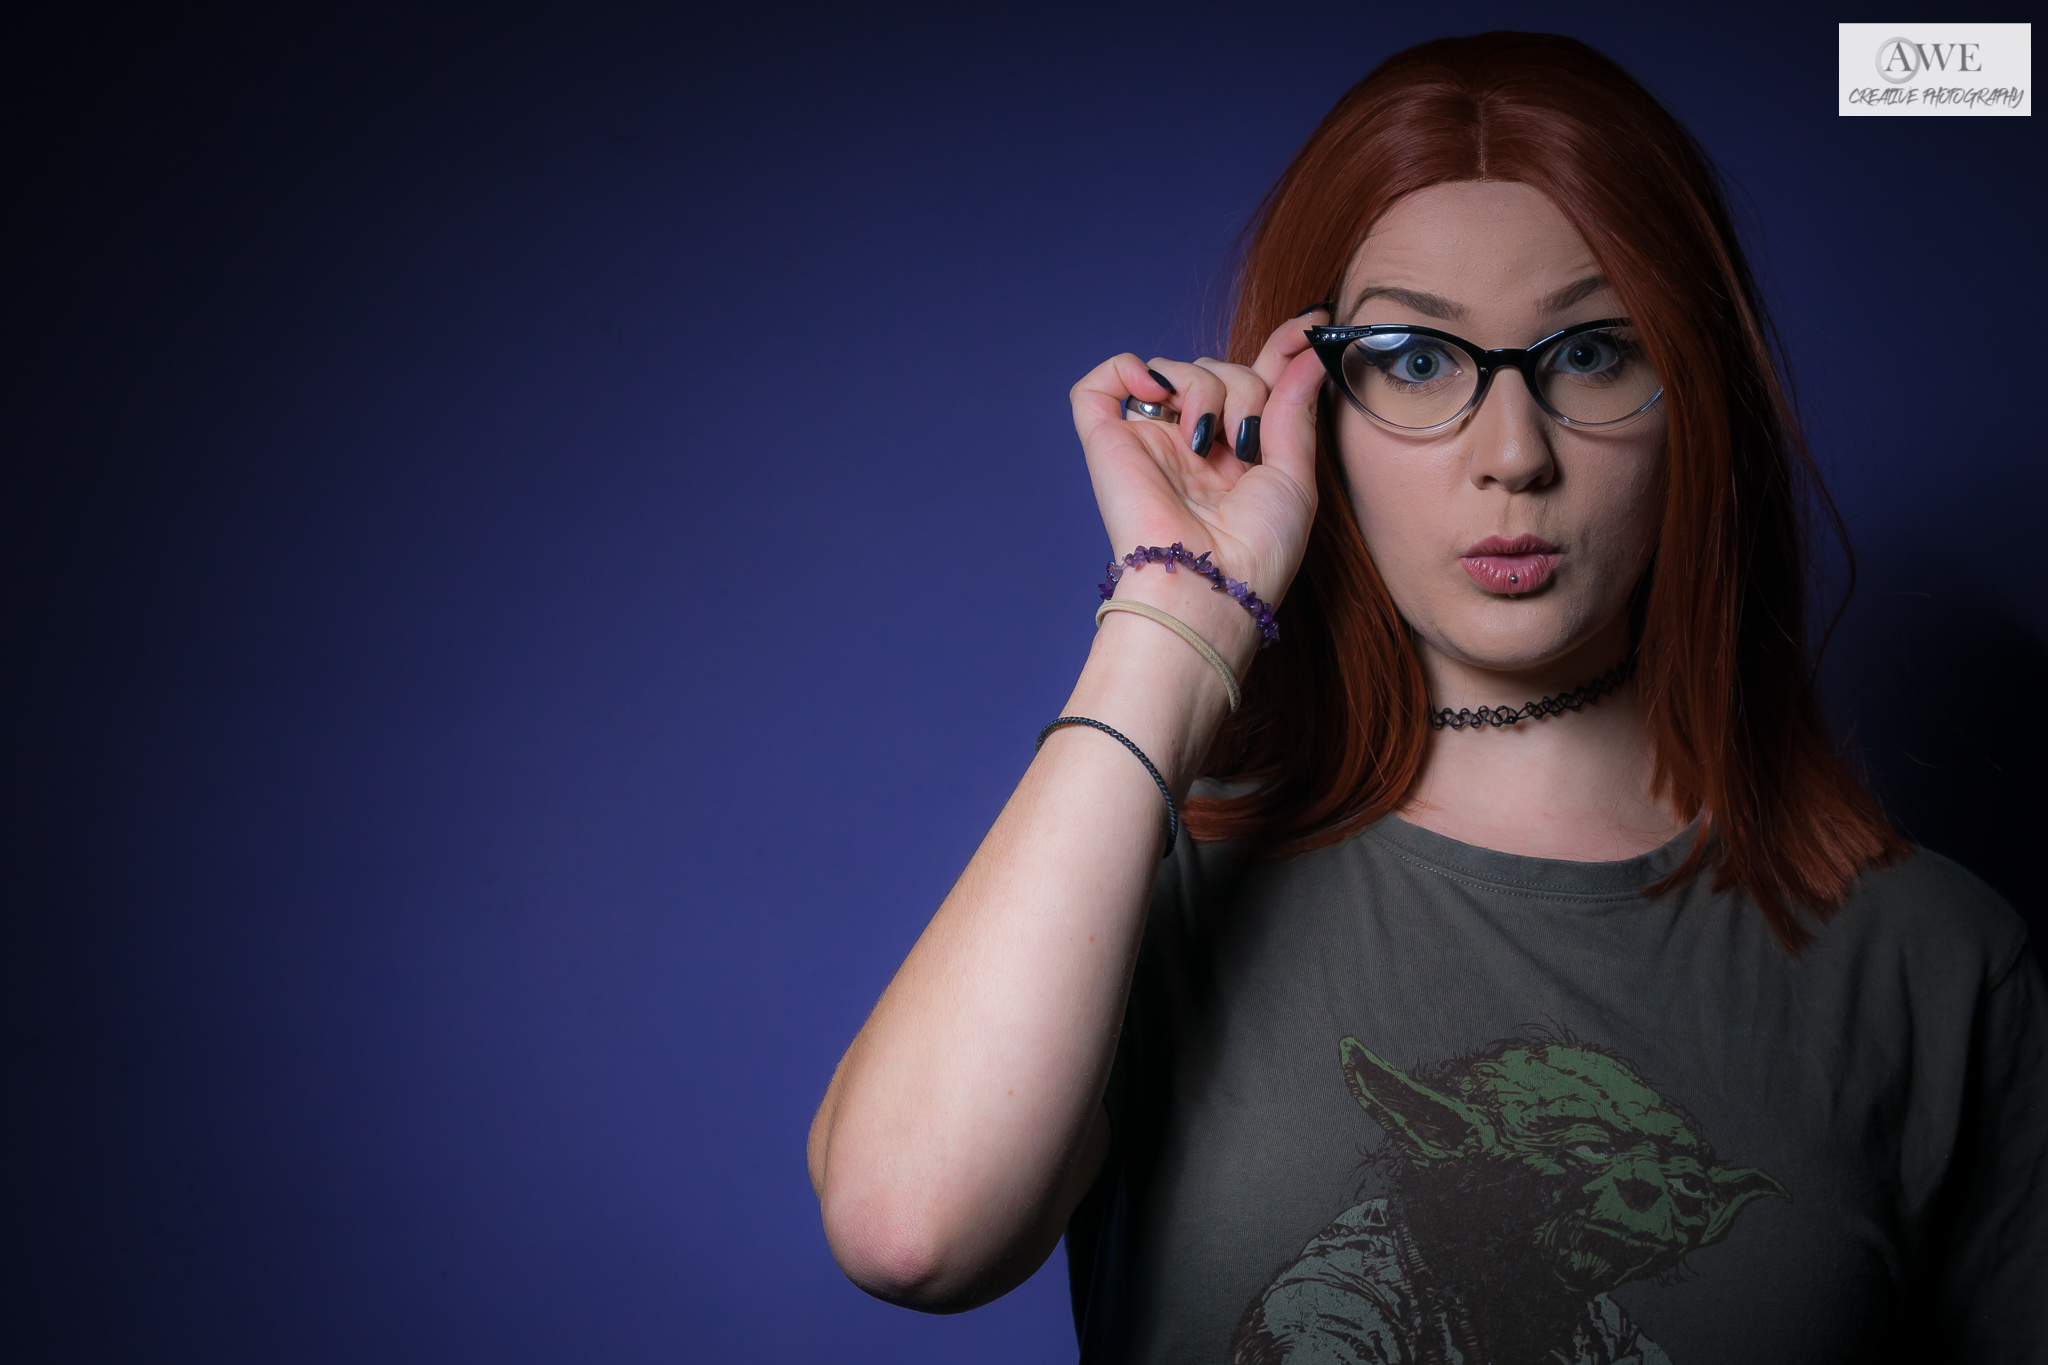 Geek Girl Photoshoot | Geek girls, Geek stuff, Girl